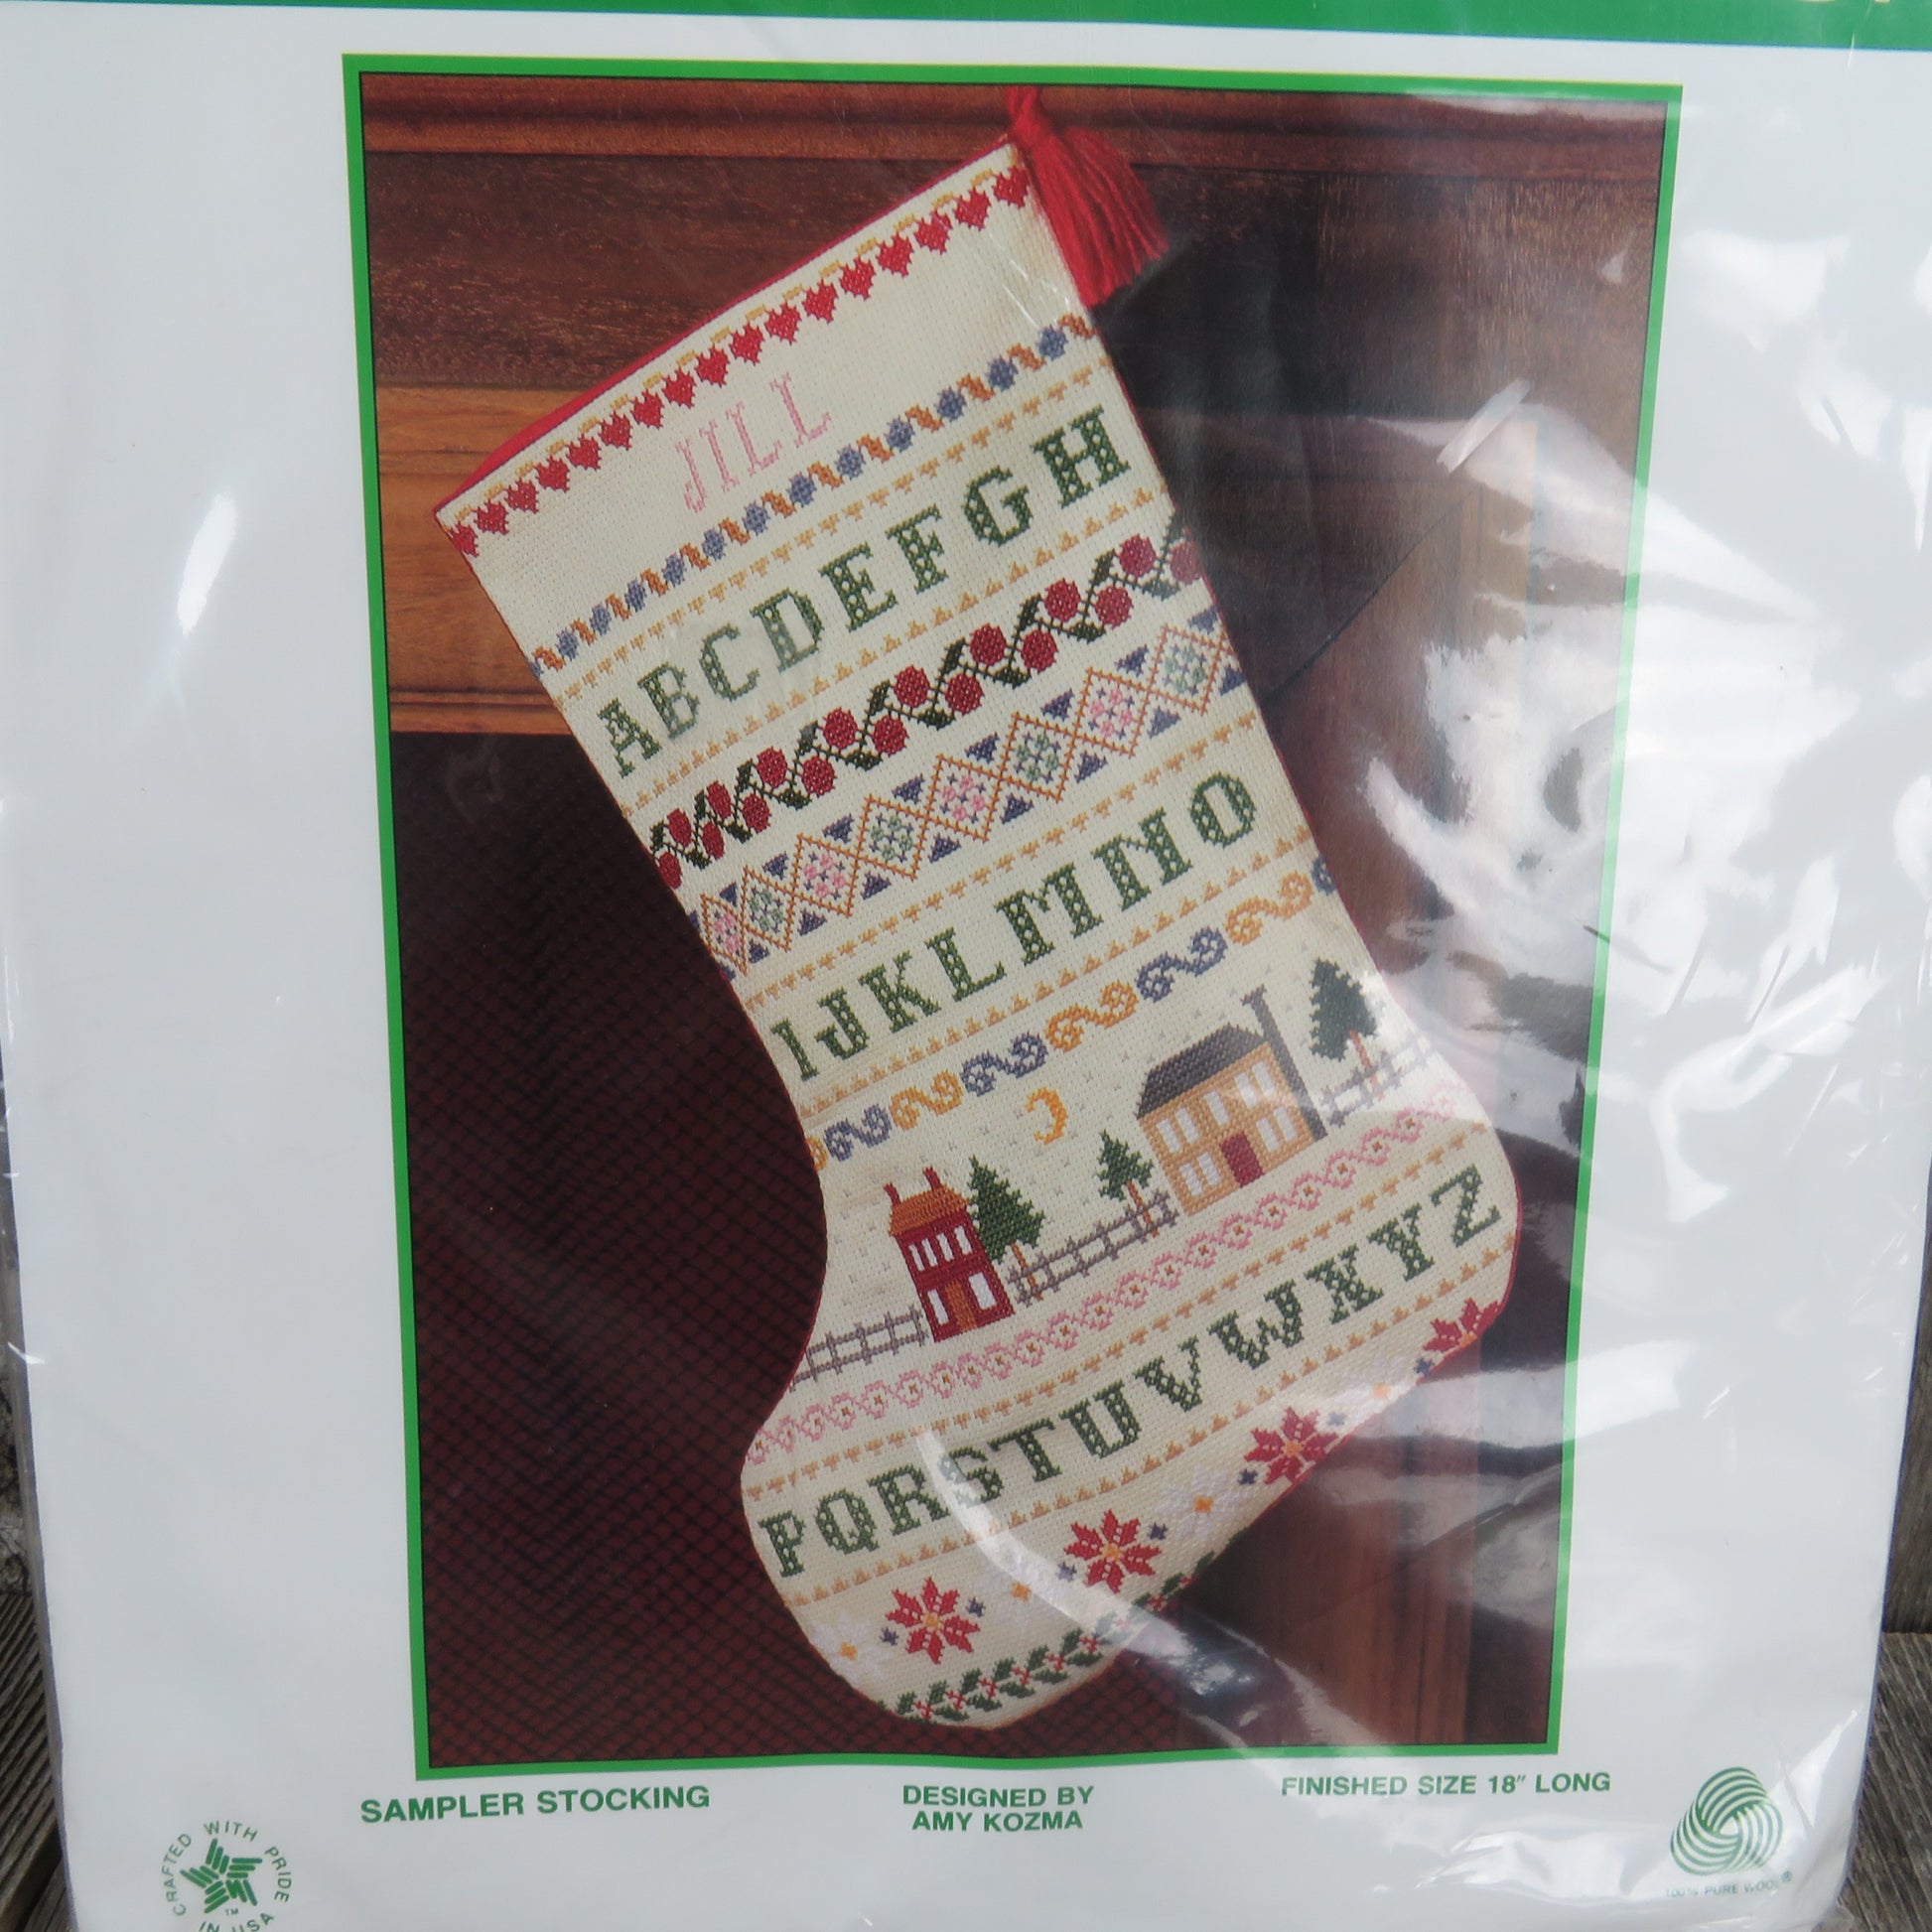 Sunset Christmas Stocking Kit Counted Cross Stitch Sampler Pattern 2918 Wool - At Grandma's Table